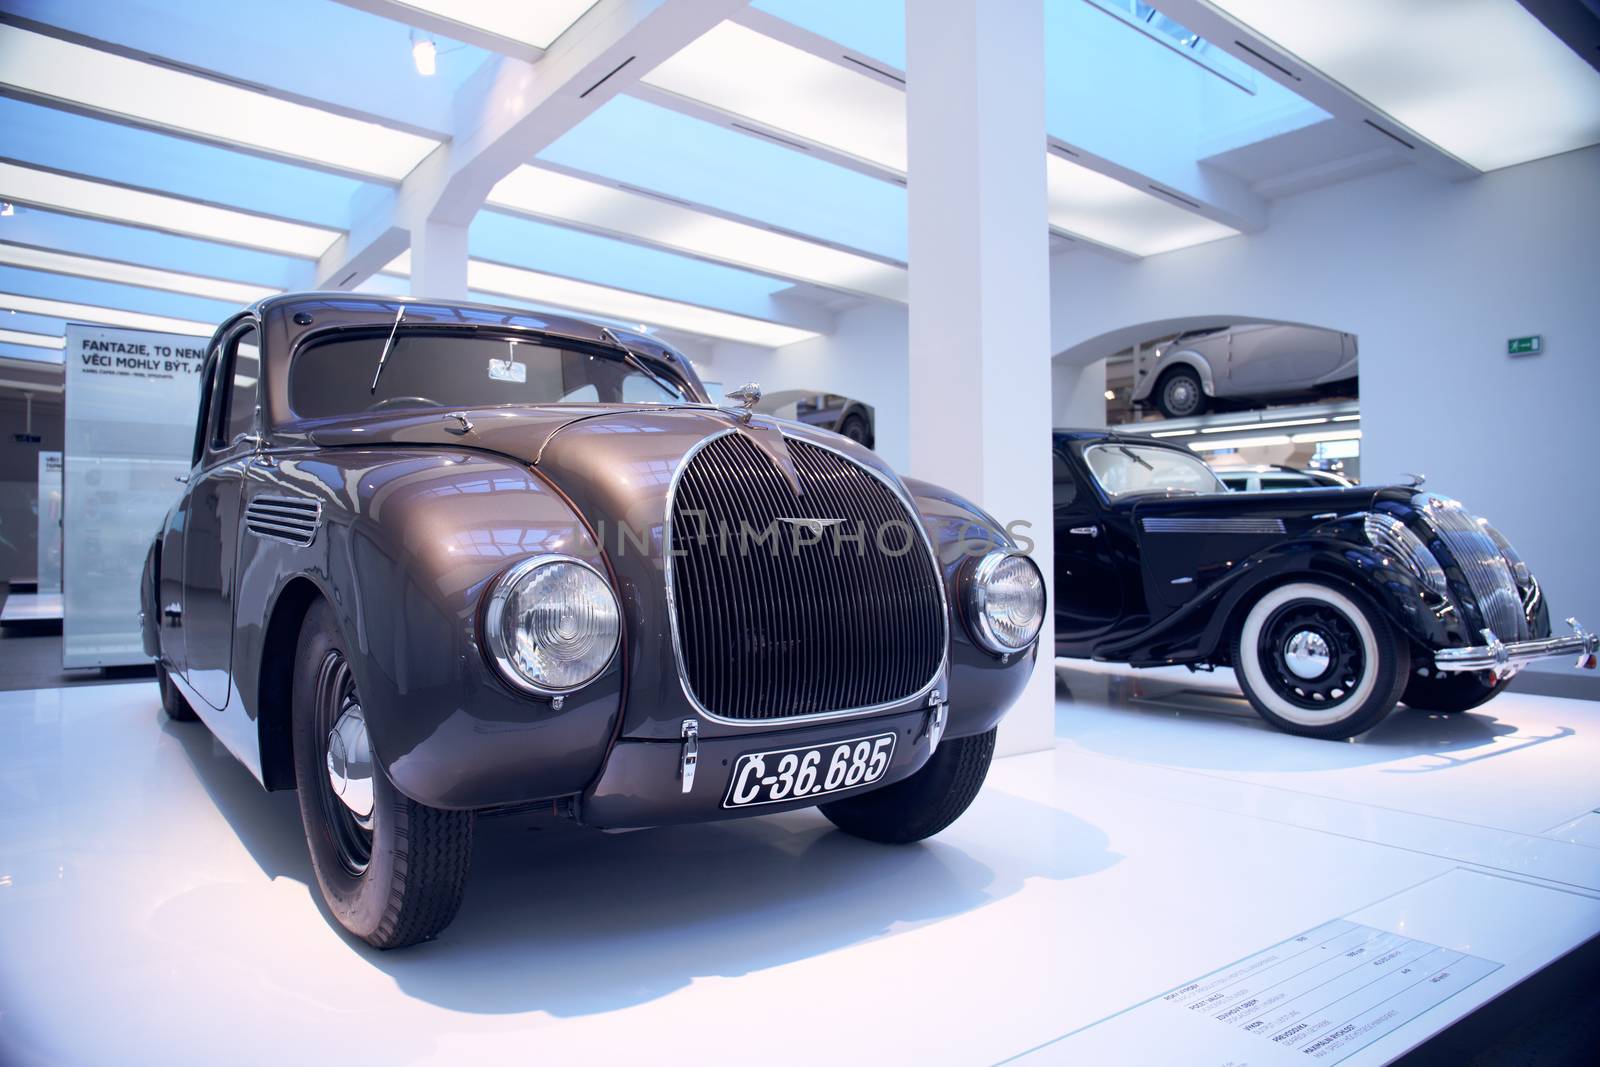 Mlada Boleslav/Czech Republic - January 6, 2019: Skoda Auto Museum, Automobile museum presents the history of the company Skoda and Laurin & Klement